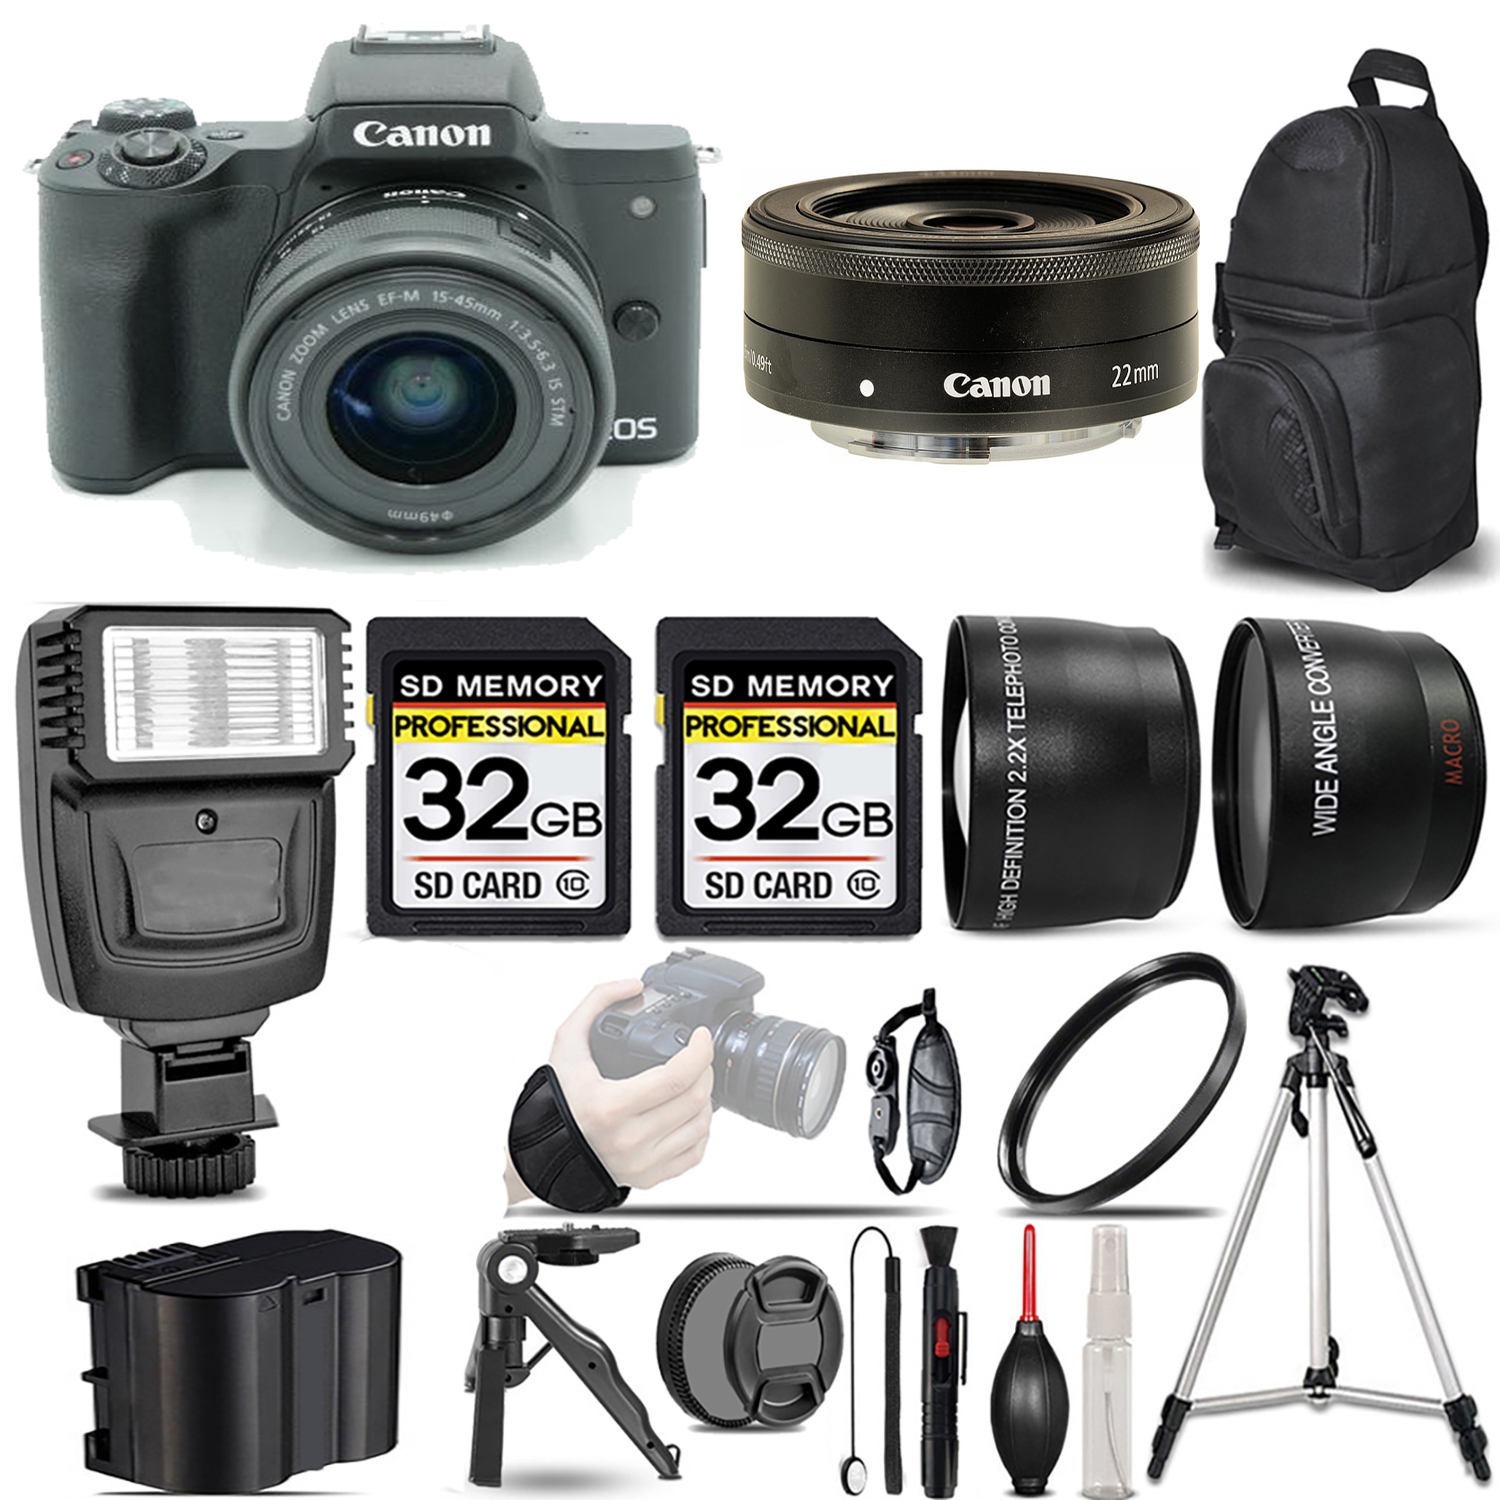 M50 Mark II + 15-45mm Lens (Black) + 22mm f/2 STM Lens + Flash + 64GB - Kit *FREE SHIPPING*